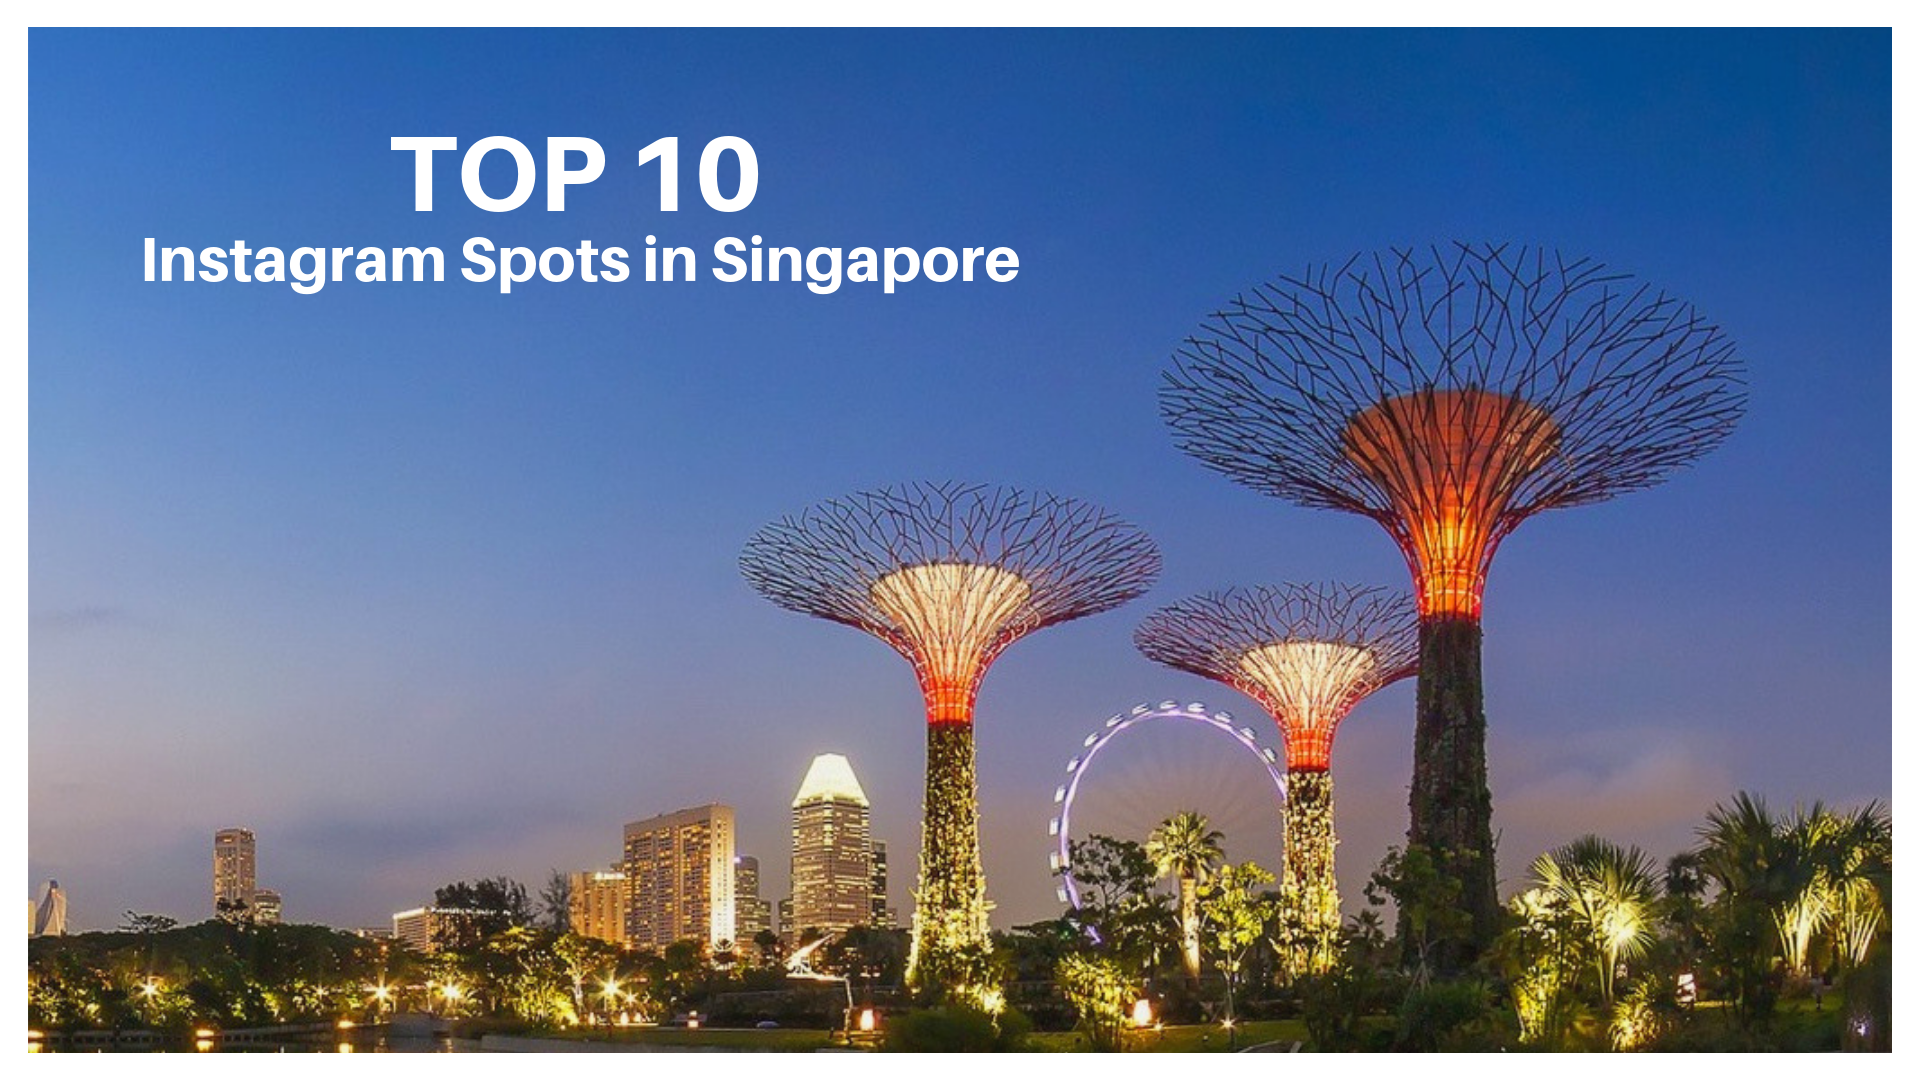 Top 10 Instagram spots in Singapore 2019